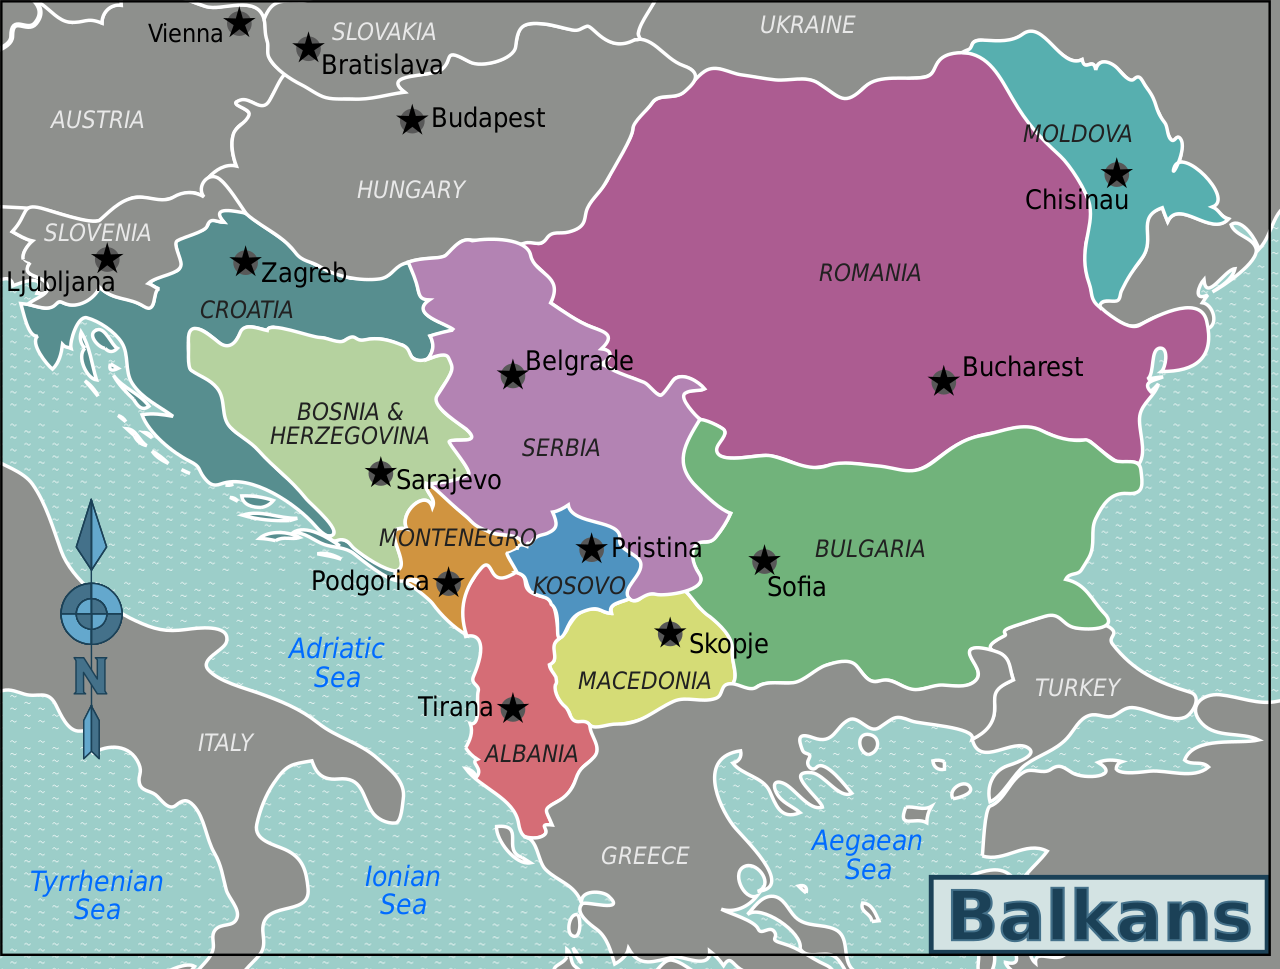 the Balkans